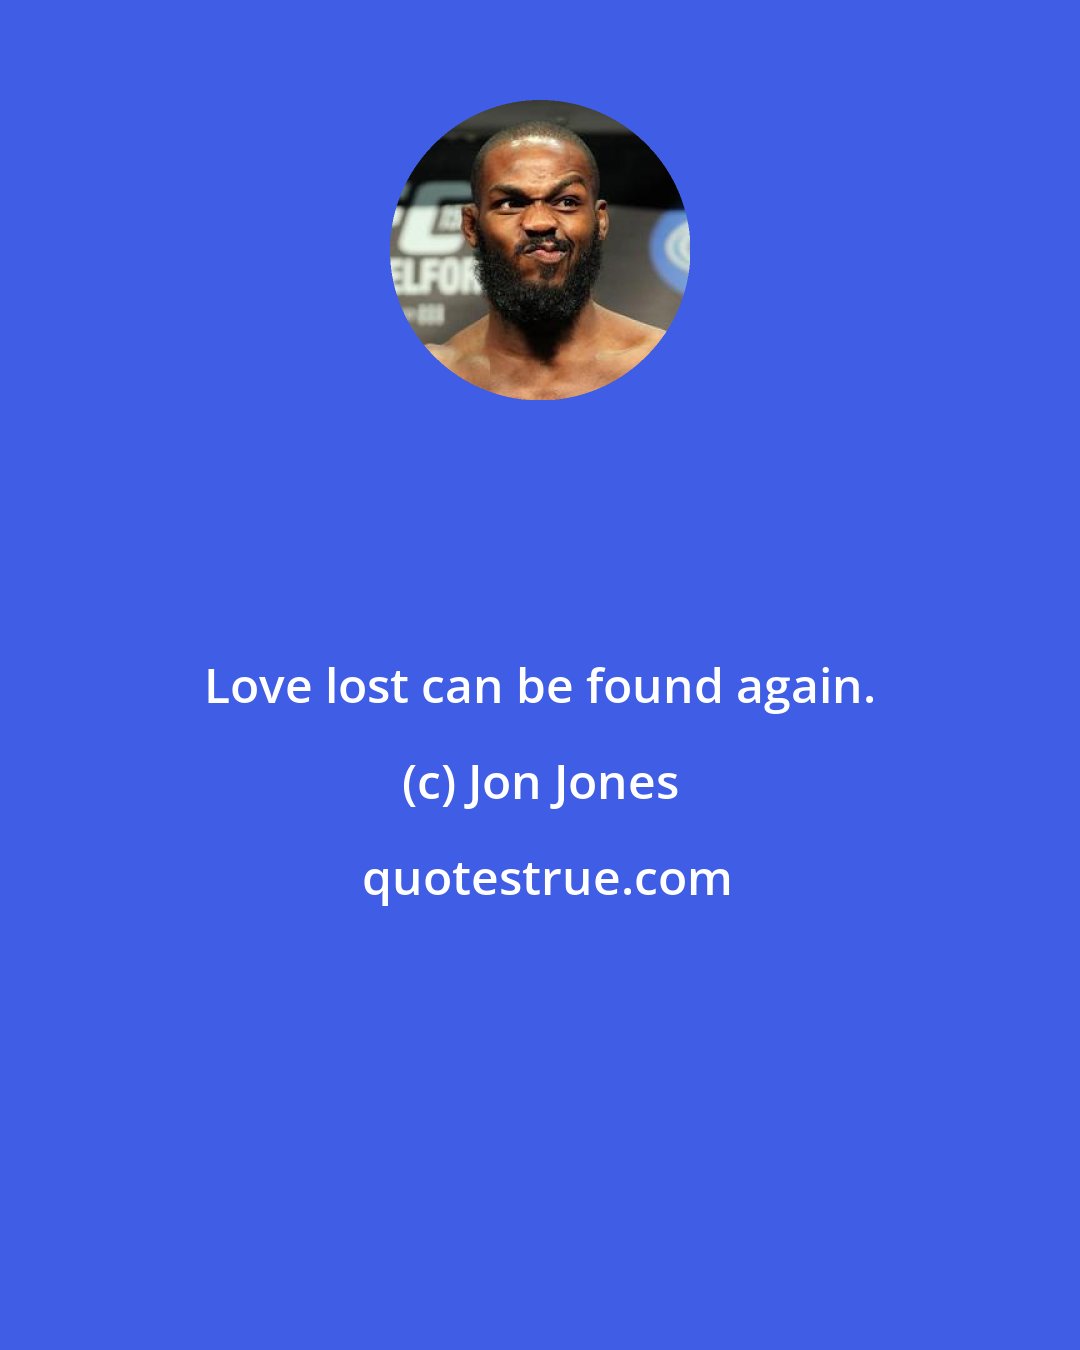 Jon Jones: Love lost can be found again.